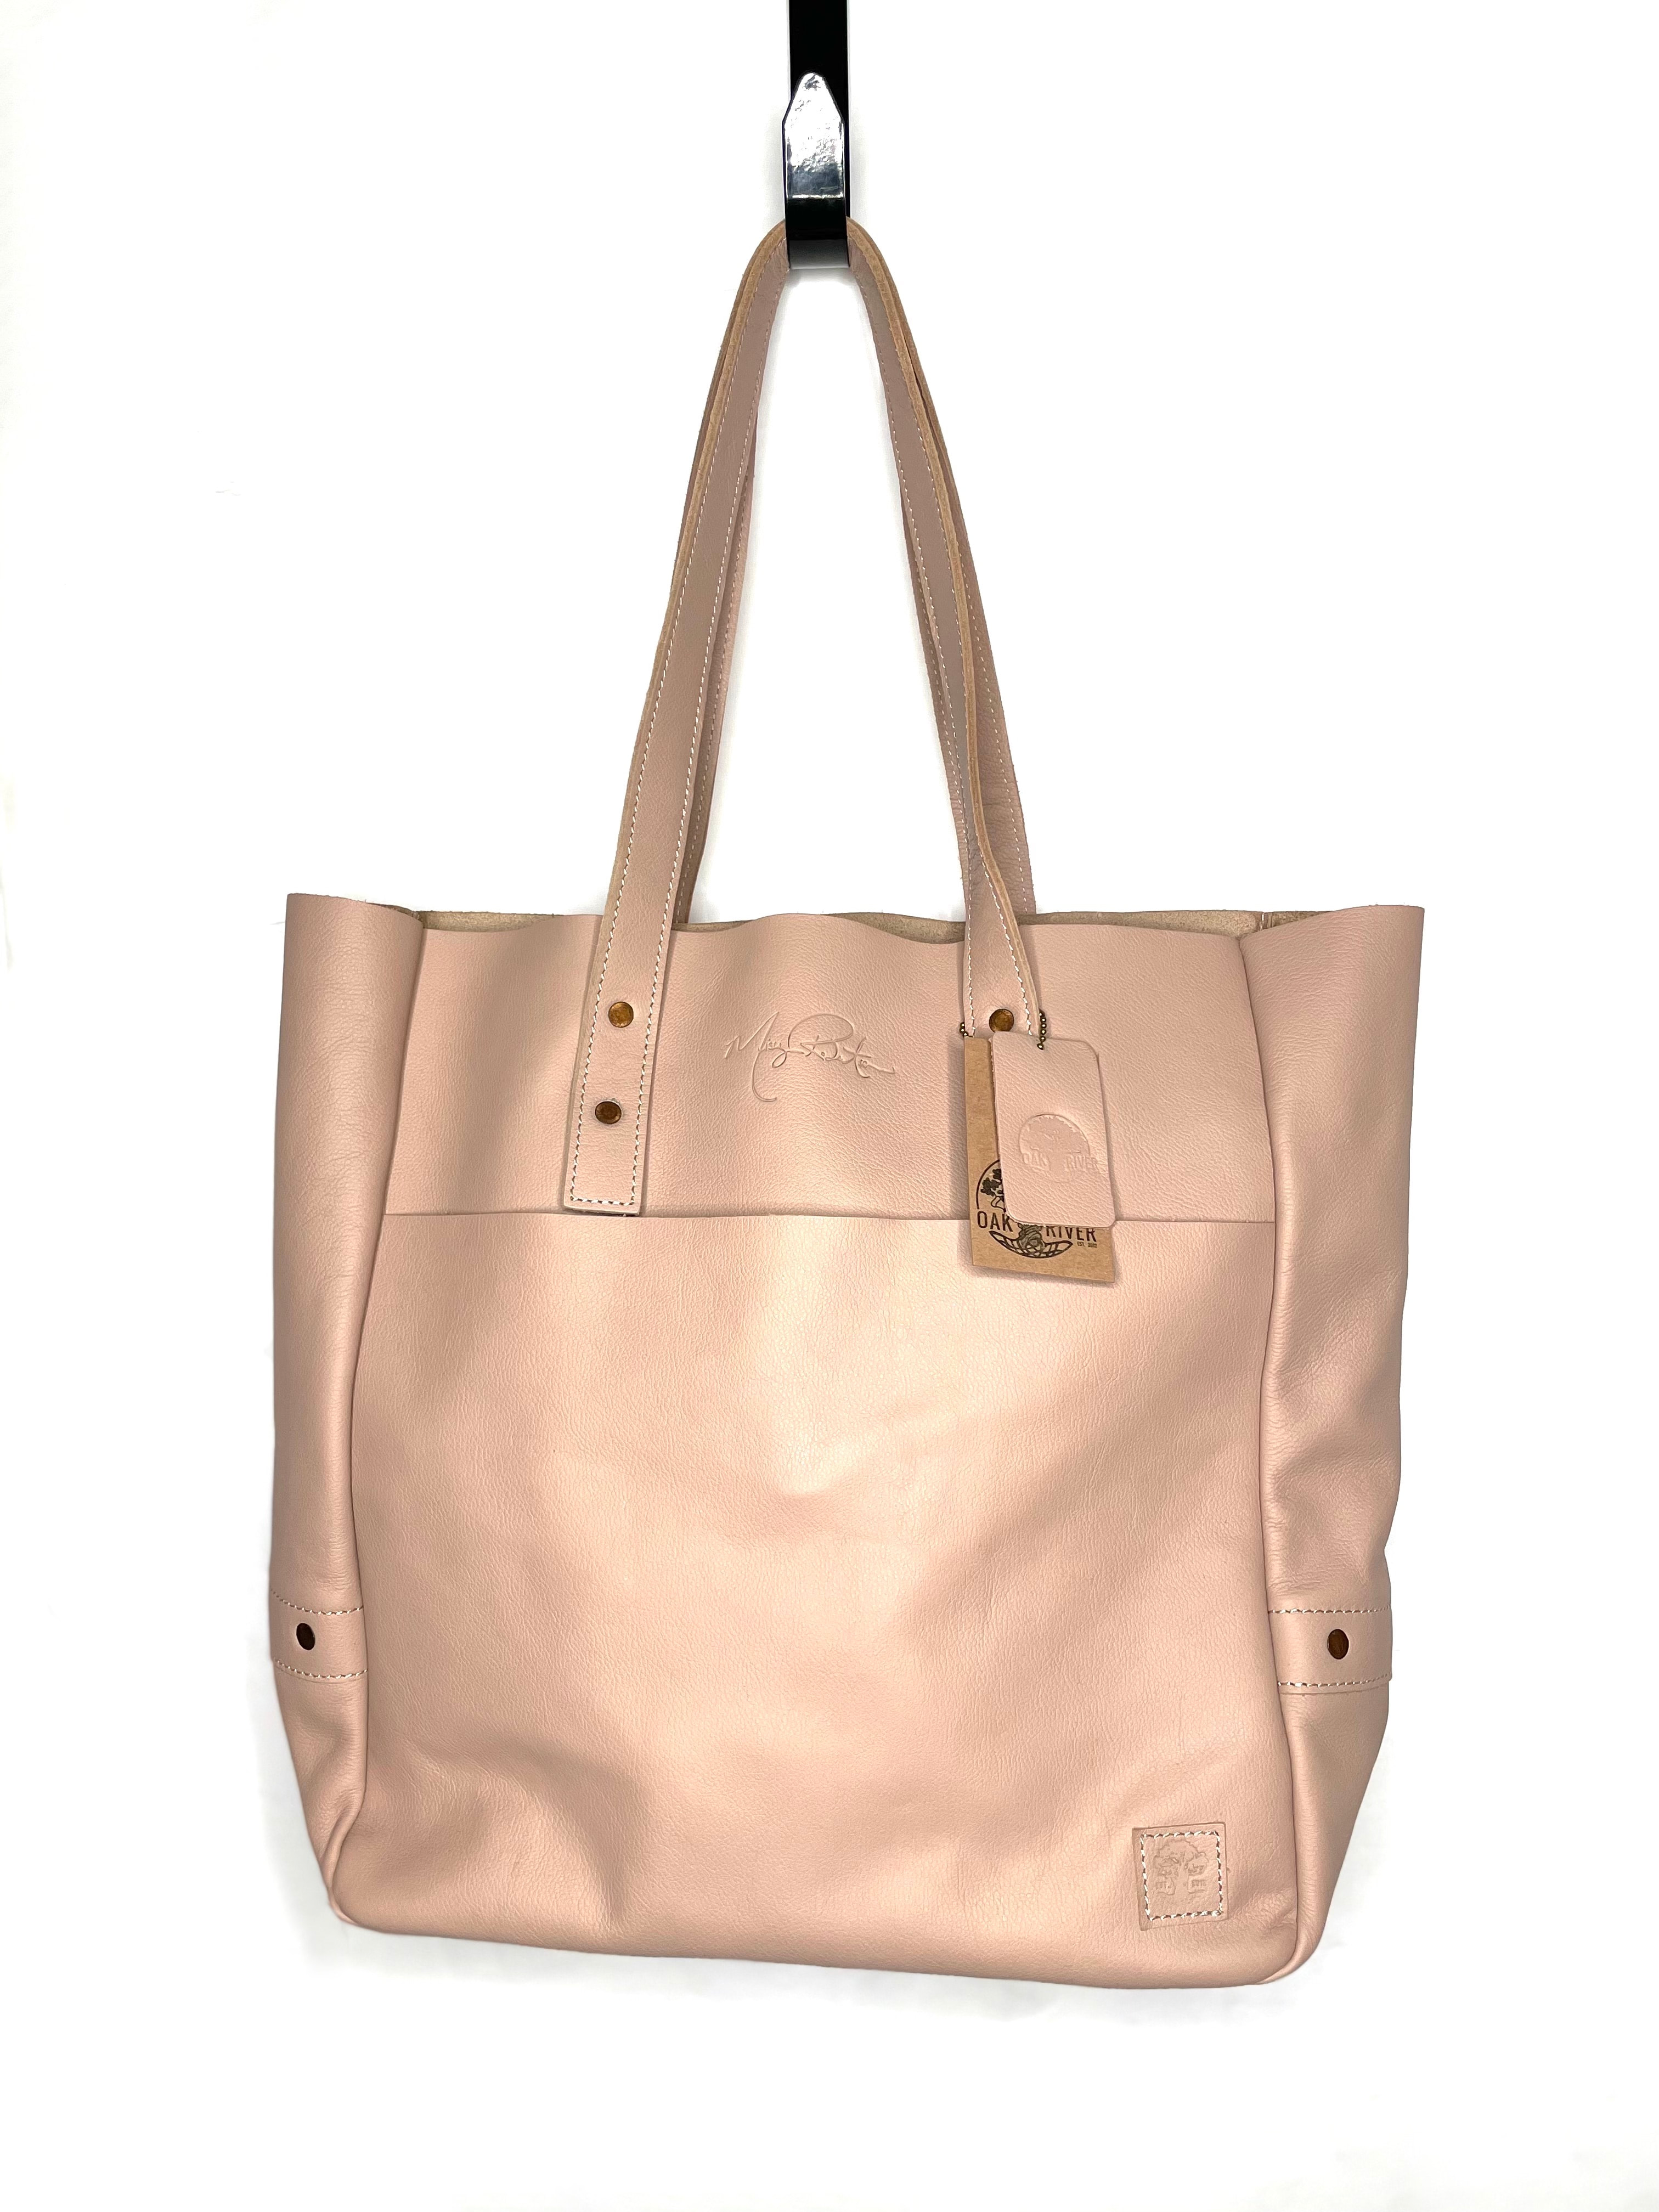 Women's Handbags & Bags | Tote Bags & Cross Body Styles | Do